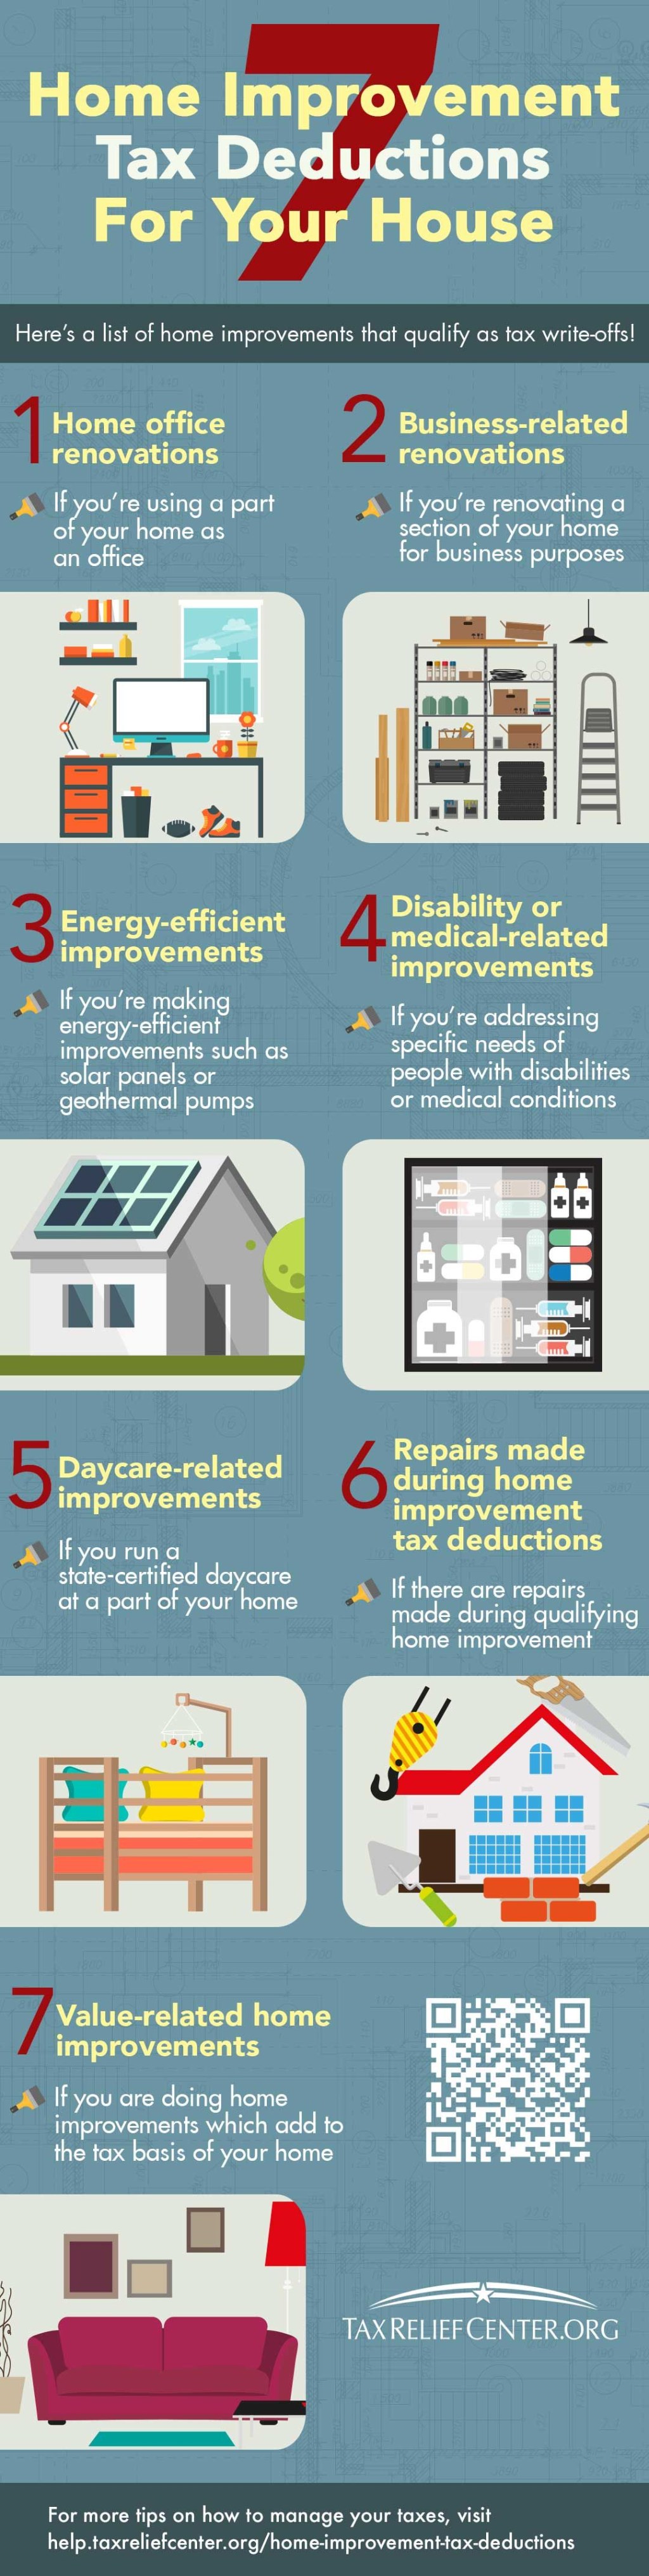 home improvement deductions - Home Improvement Tax Deductions [INFOGRAPHIC]  Tax deductions